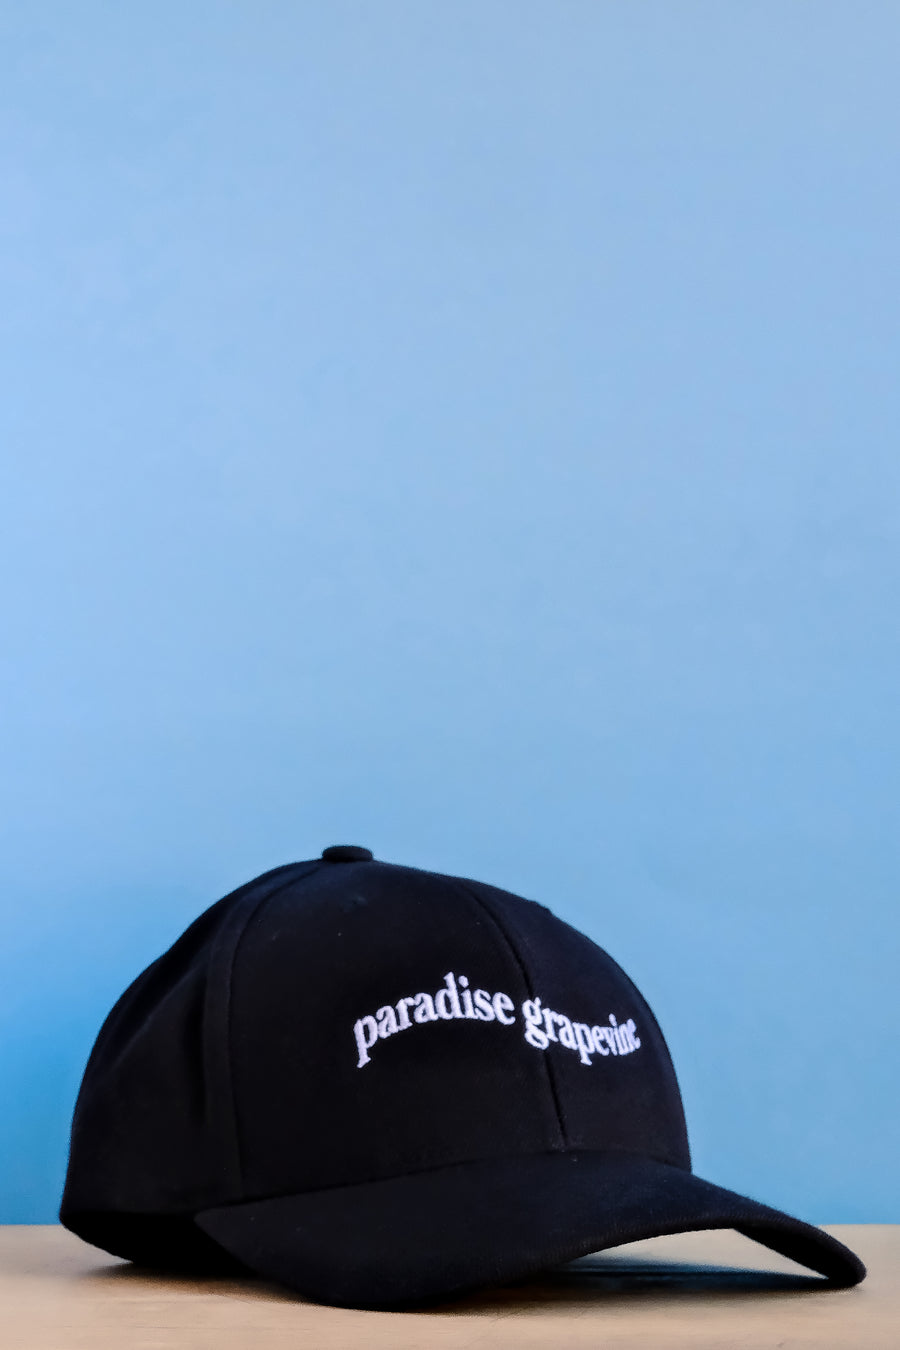 Paradise Grapevine Ball Cap